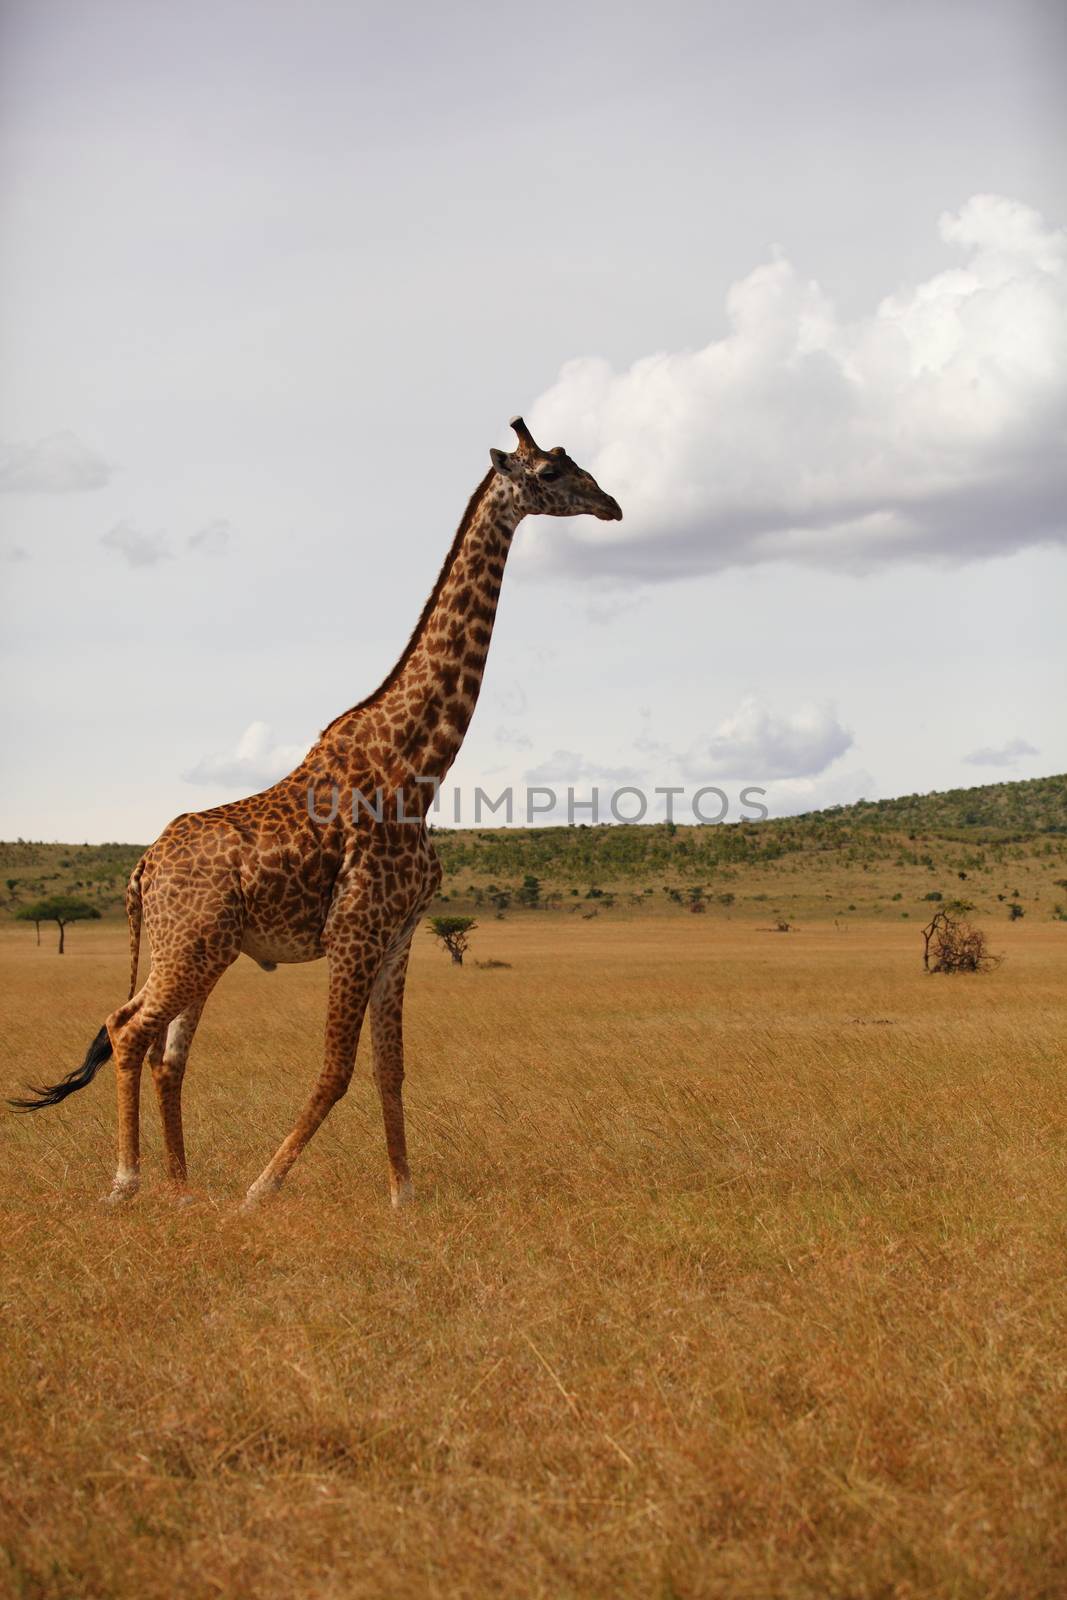 Giraffe in the wilderness of Africa by ozkanzozmen